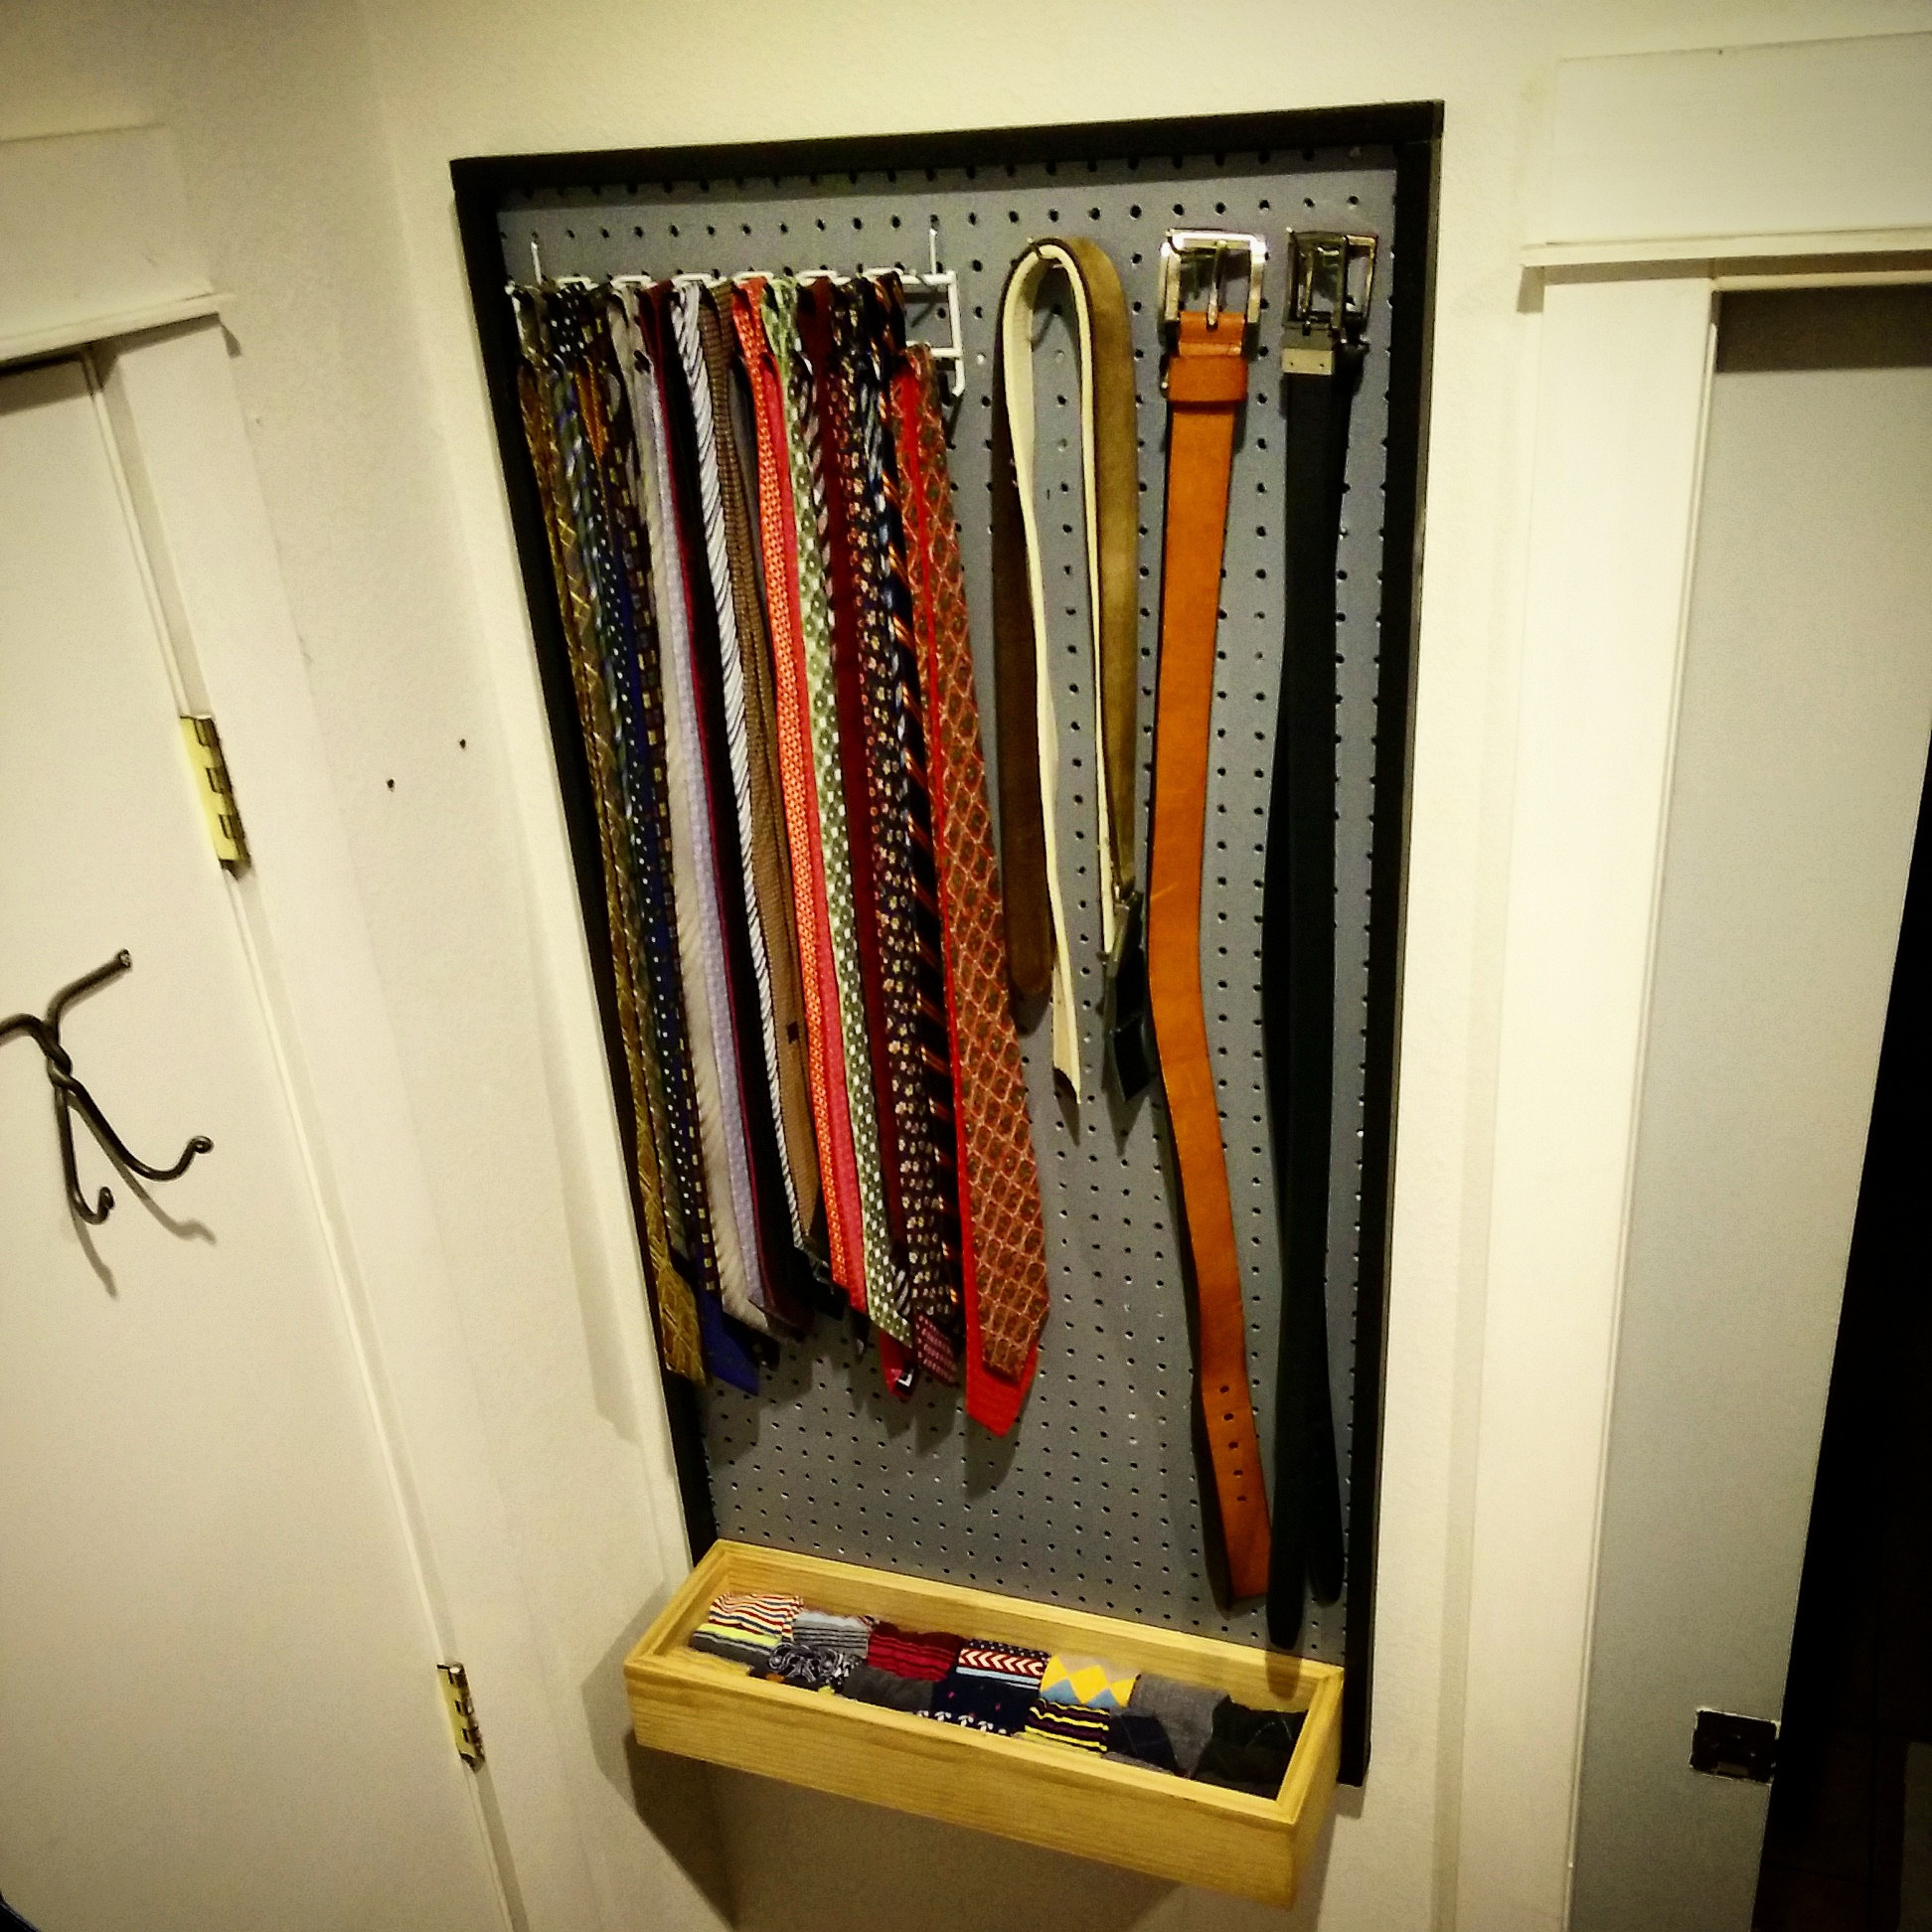 Best ideas about DIY Tie Rack
. Save or Pin tie rack belt rack sock organizer DIY project Now.